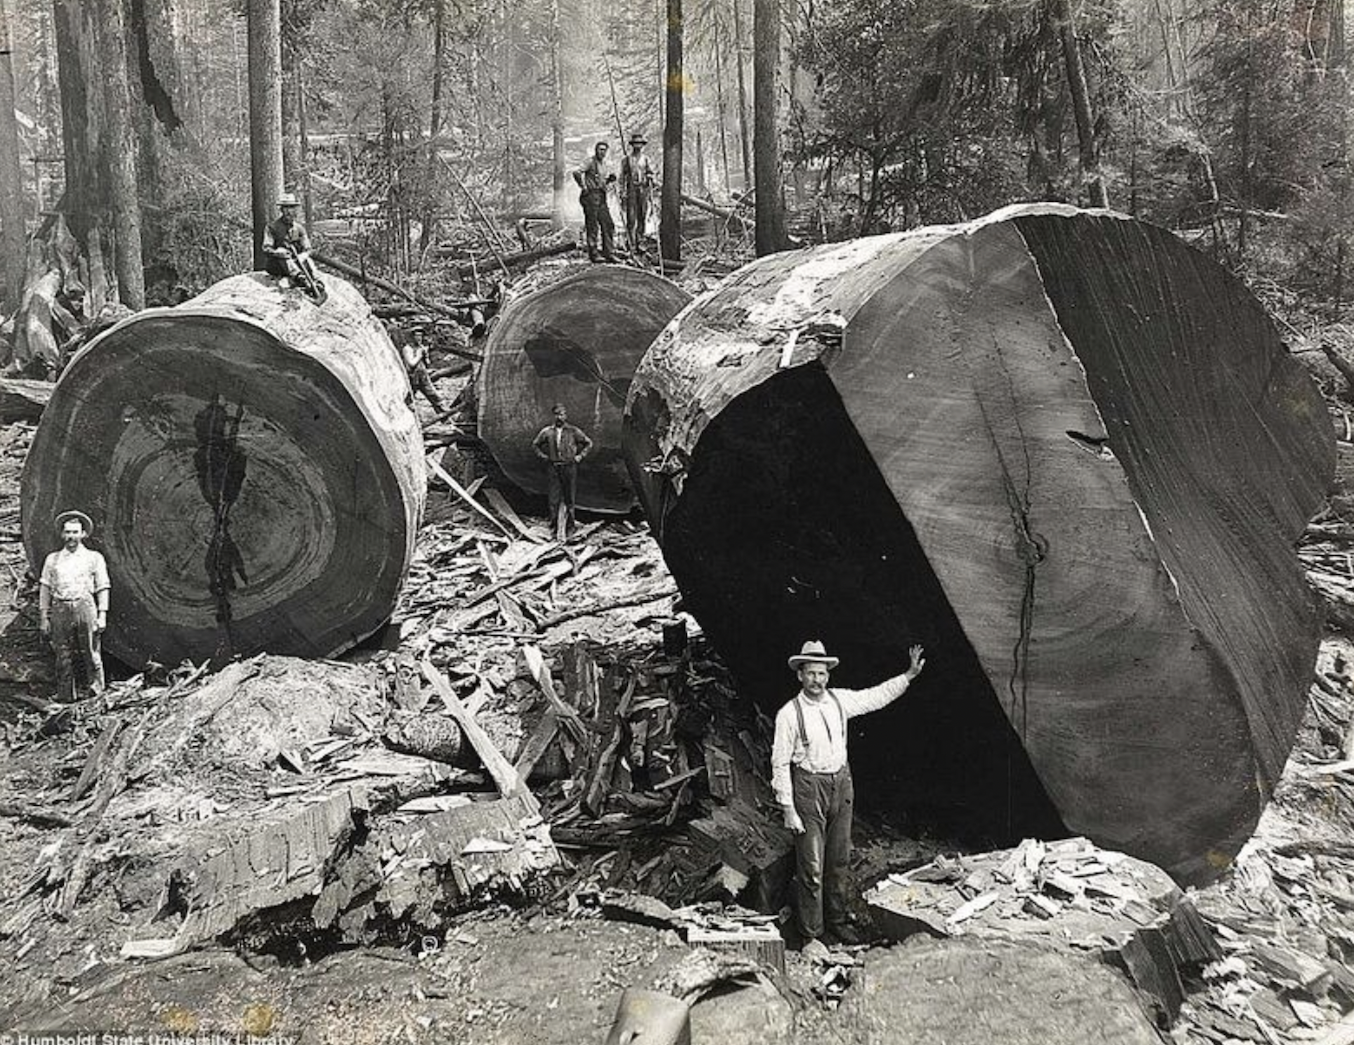 1910s - era lumberjacks working among the redwoods in Humboldt County, California, when tree logging was at its peak.